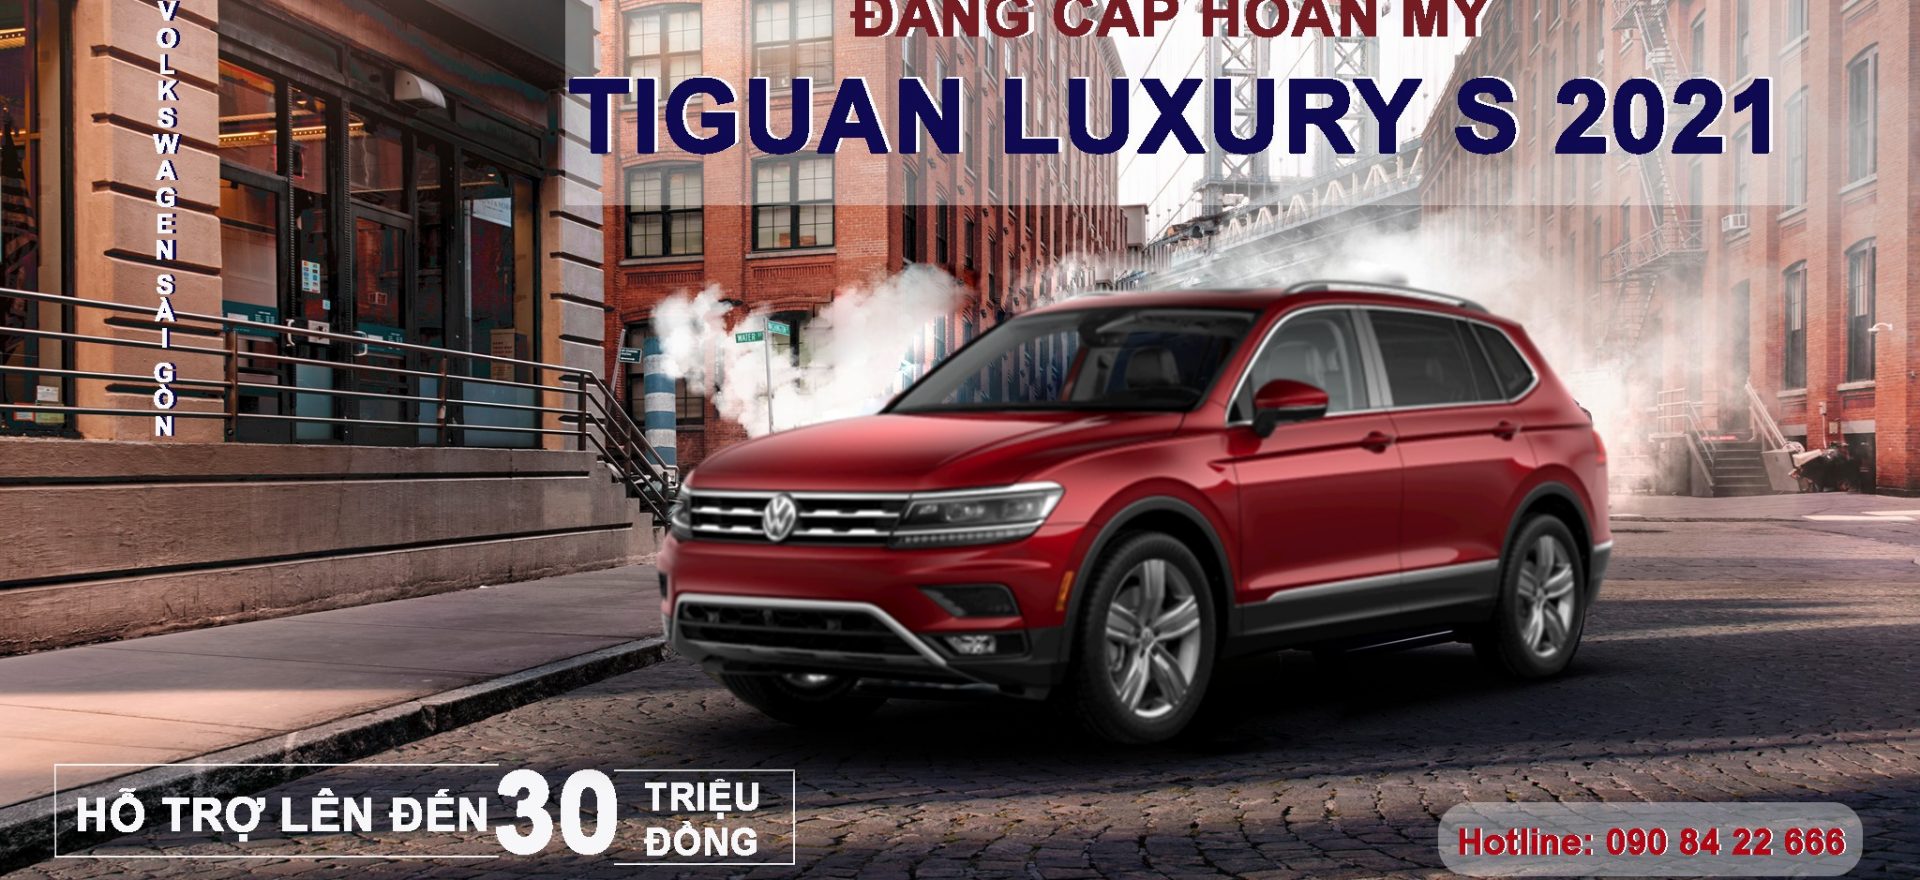 Tiguan-luxury-s-2021-dang-cap-hoan-my